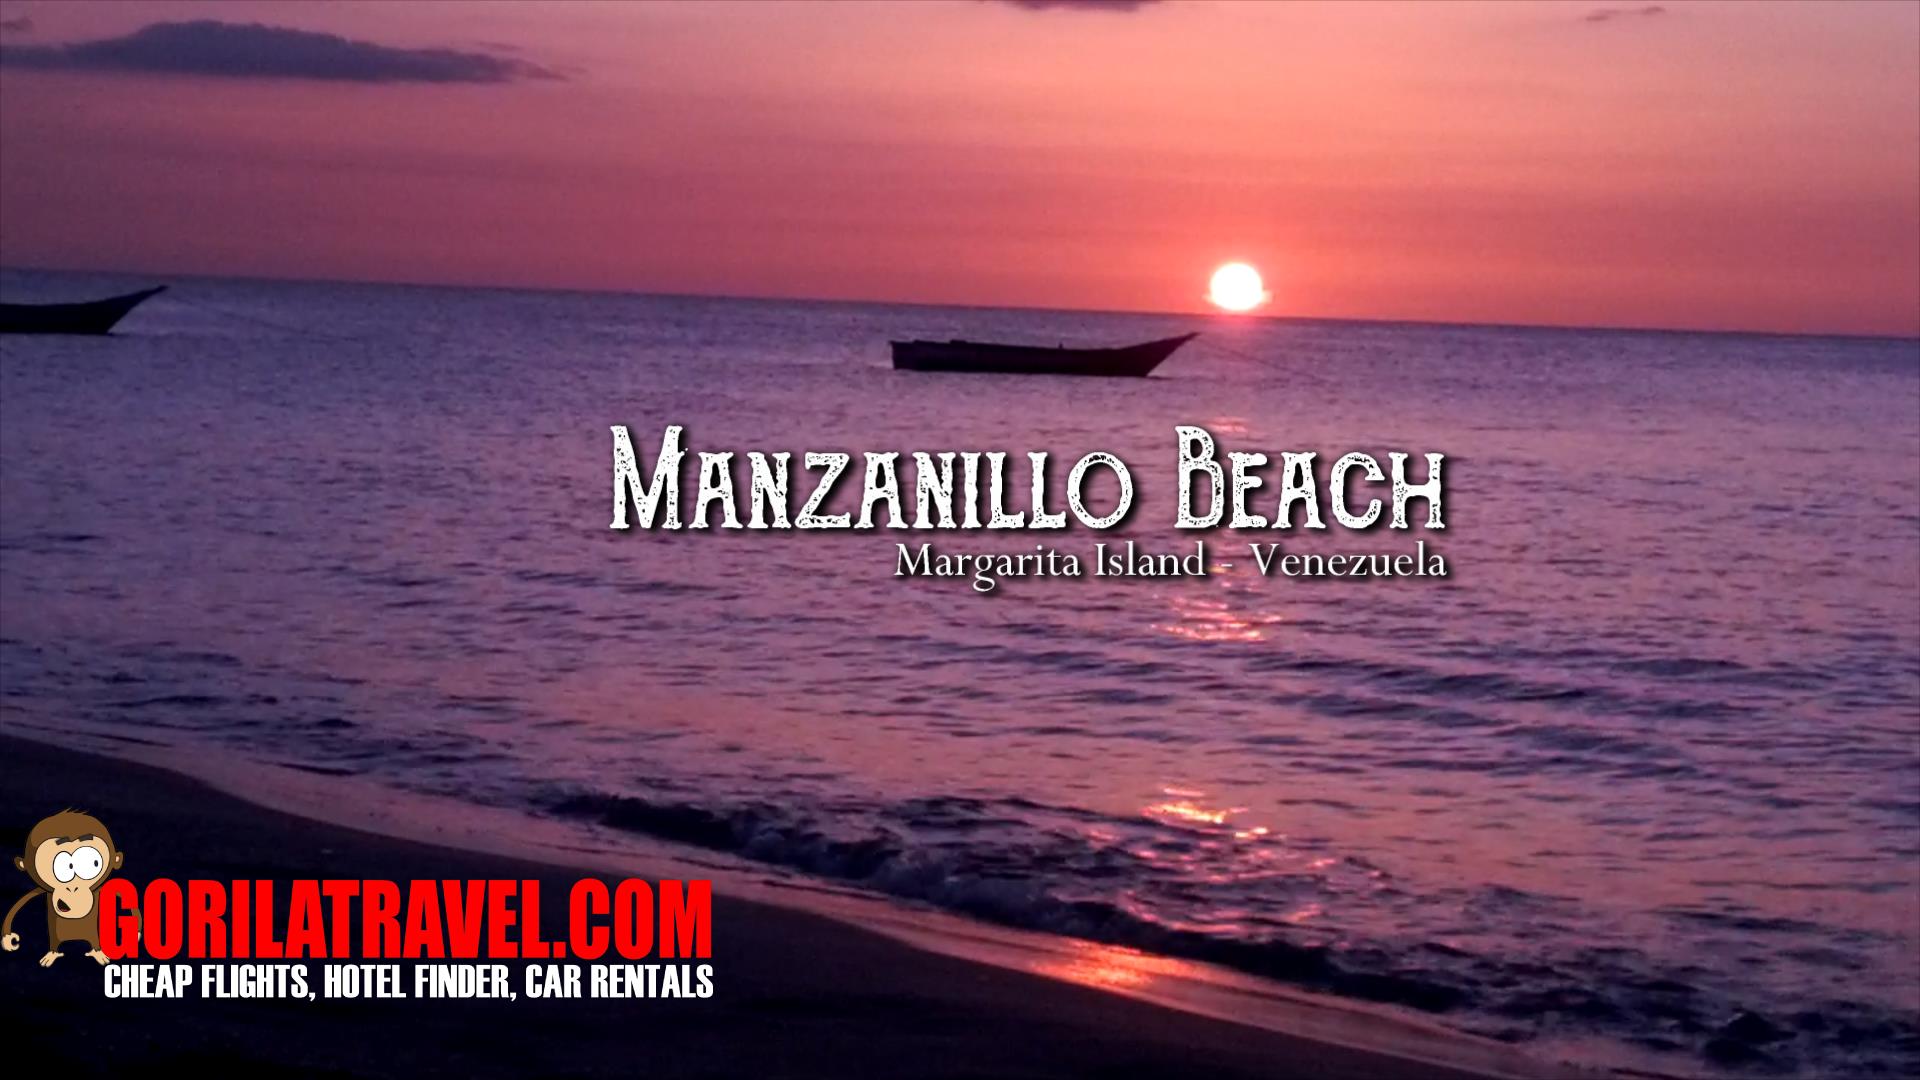 Margarita Island, Venezuela, Manzanillo Beach, Sunset Views, Travel Goals, Gorila Travel, No Hidden Fees, Find Your Paradise, Summer Vibes, South American Adventure,